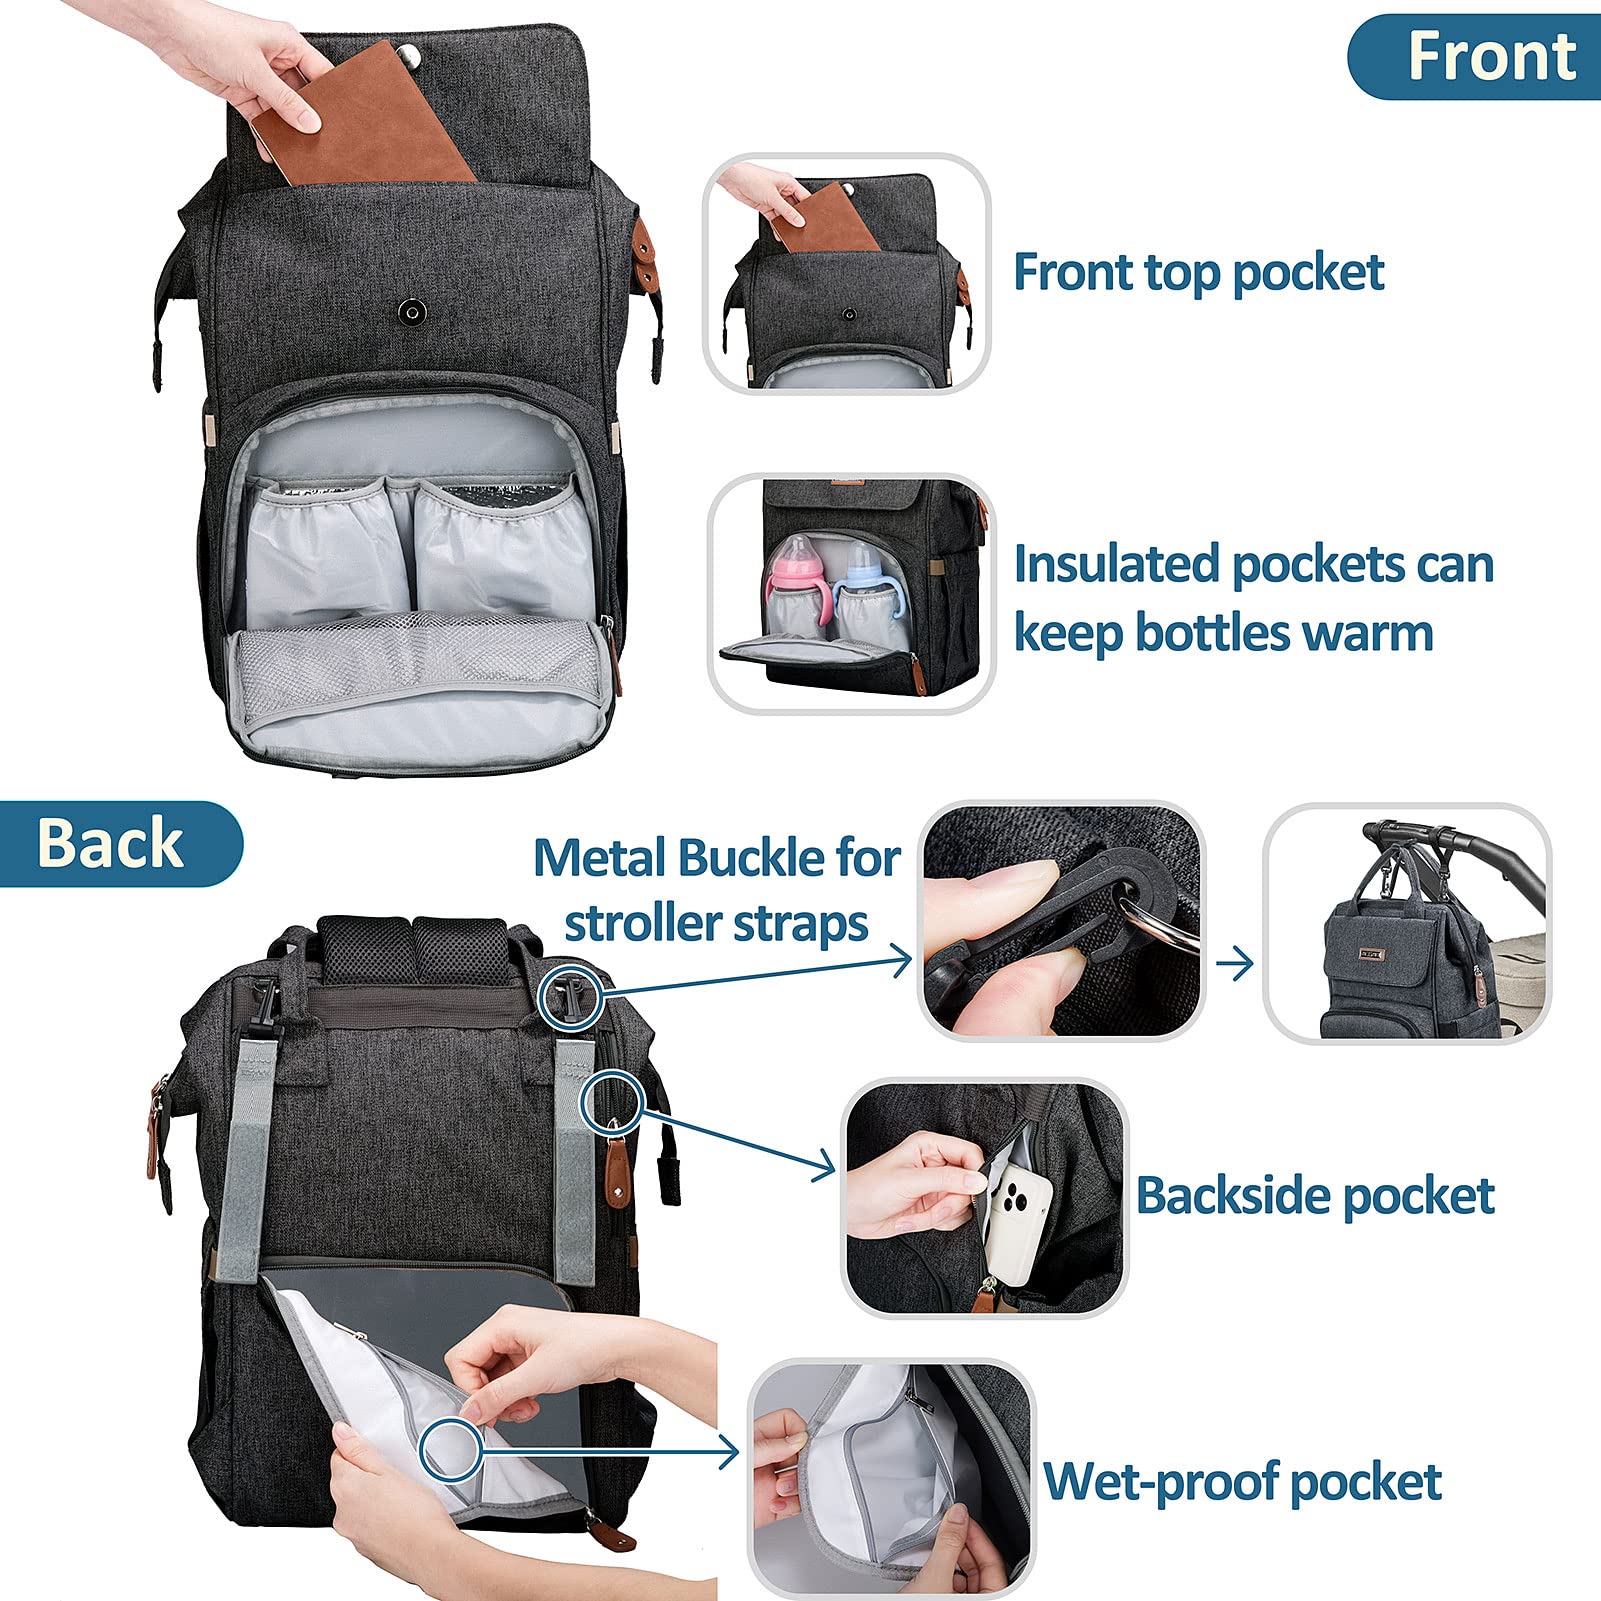 Diaper Bag Backpack, MCGMITT Nappy Bag, Baby Diaper Bag for Mom&Dad, Waterproof Diaper Bag with USB Charging Port, Stroller Straps, Diaper Changing Pad, Black